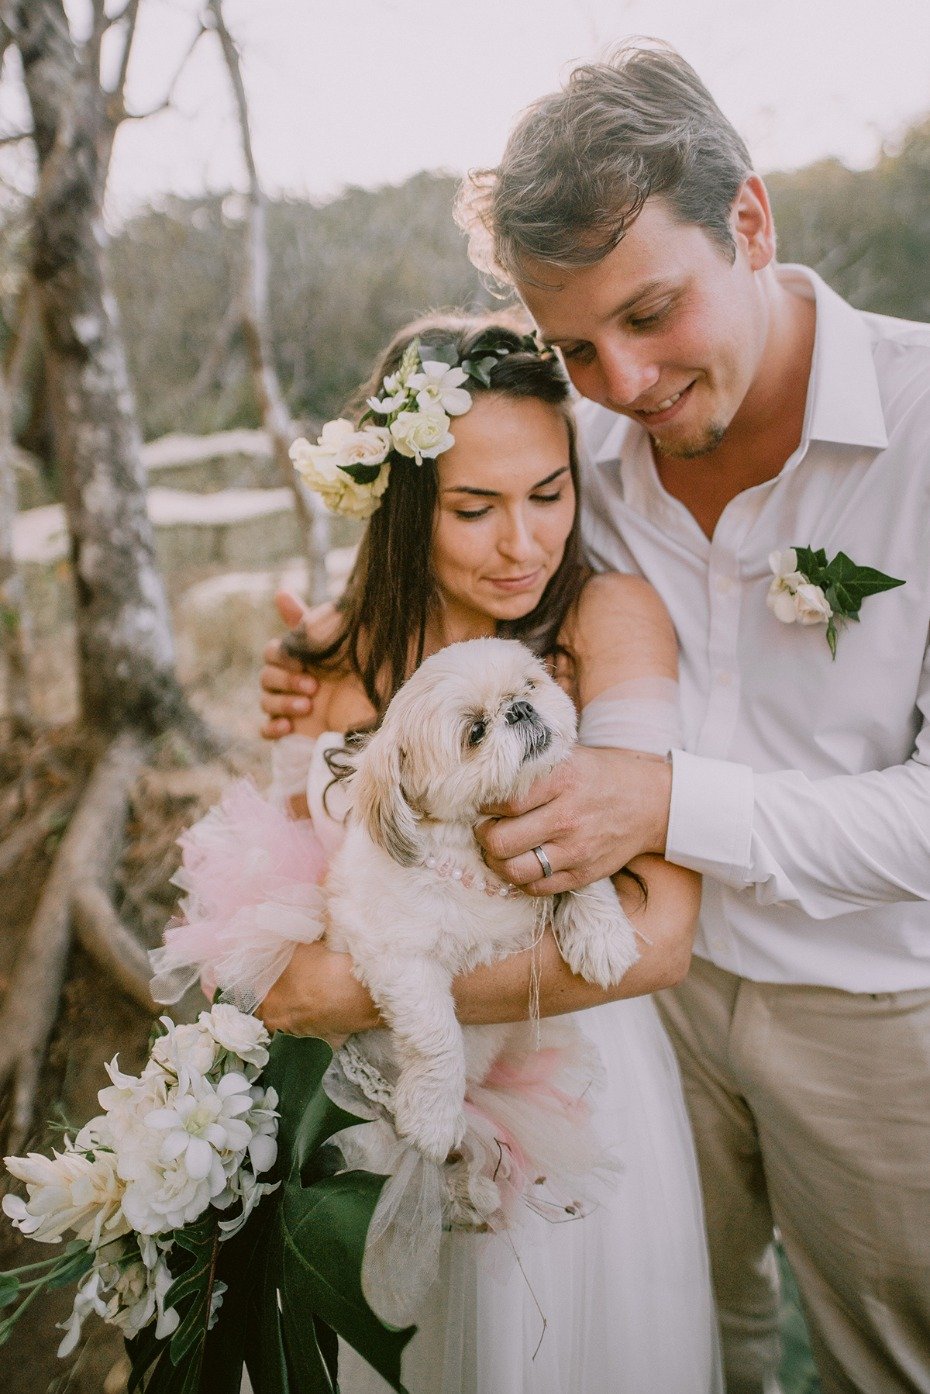 Dog at wedding photography ideas